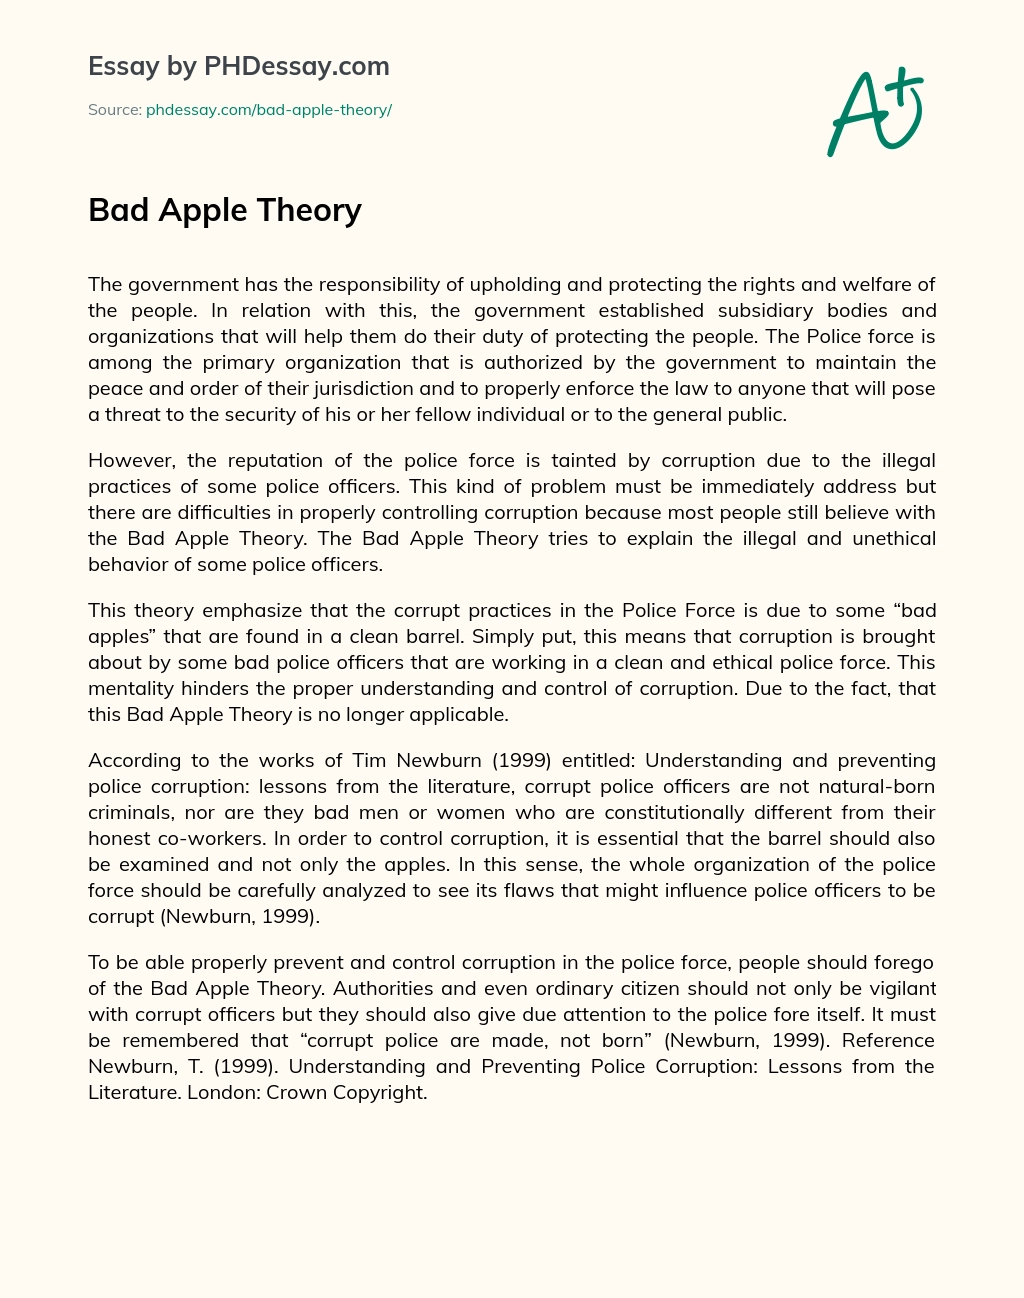 Bad Apple Theory essay